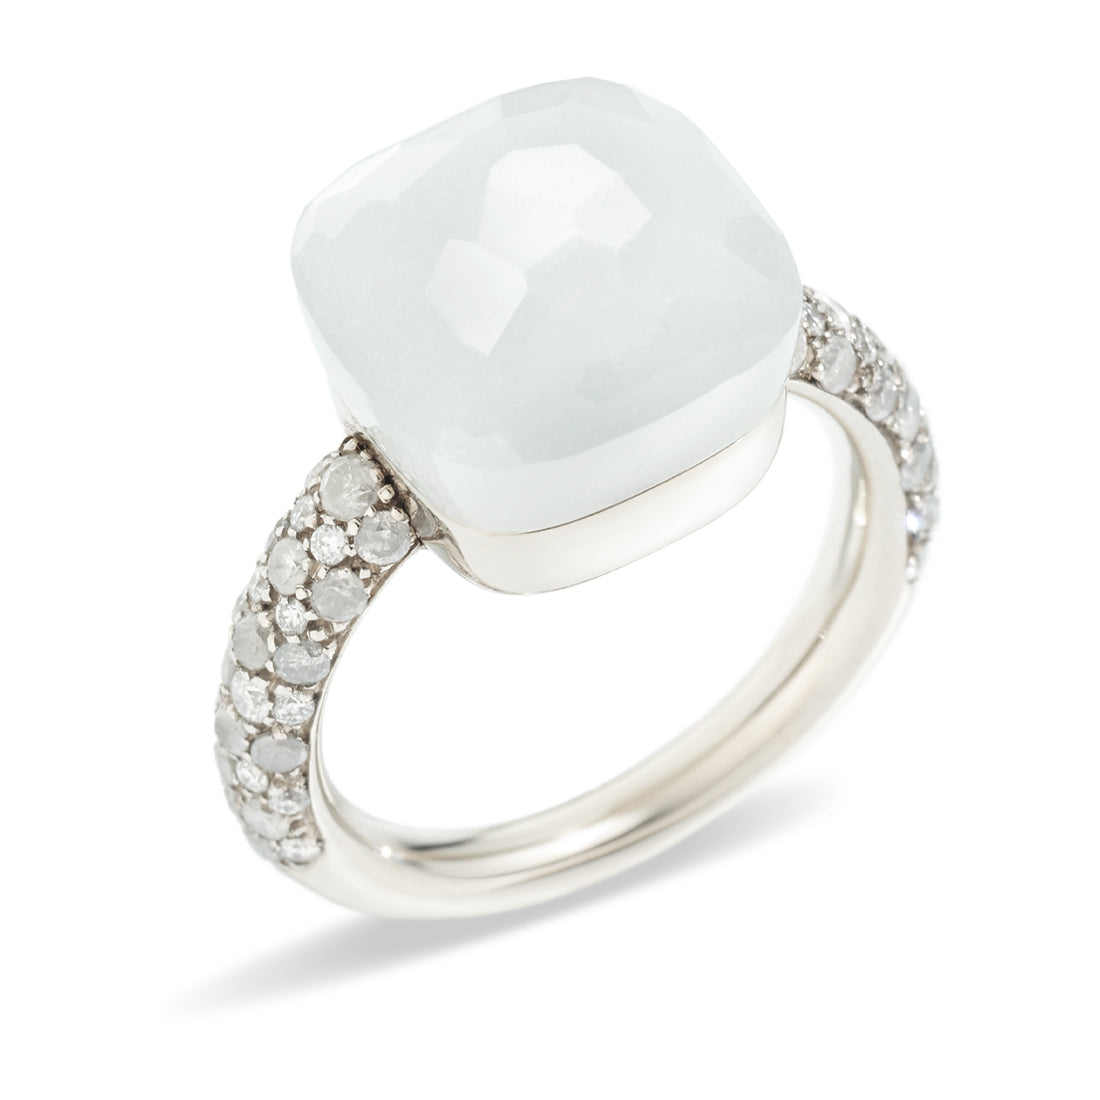 Pomellato 18kt Rose and White Gold Nudo Solitaire Diamond Ring